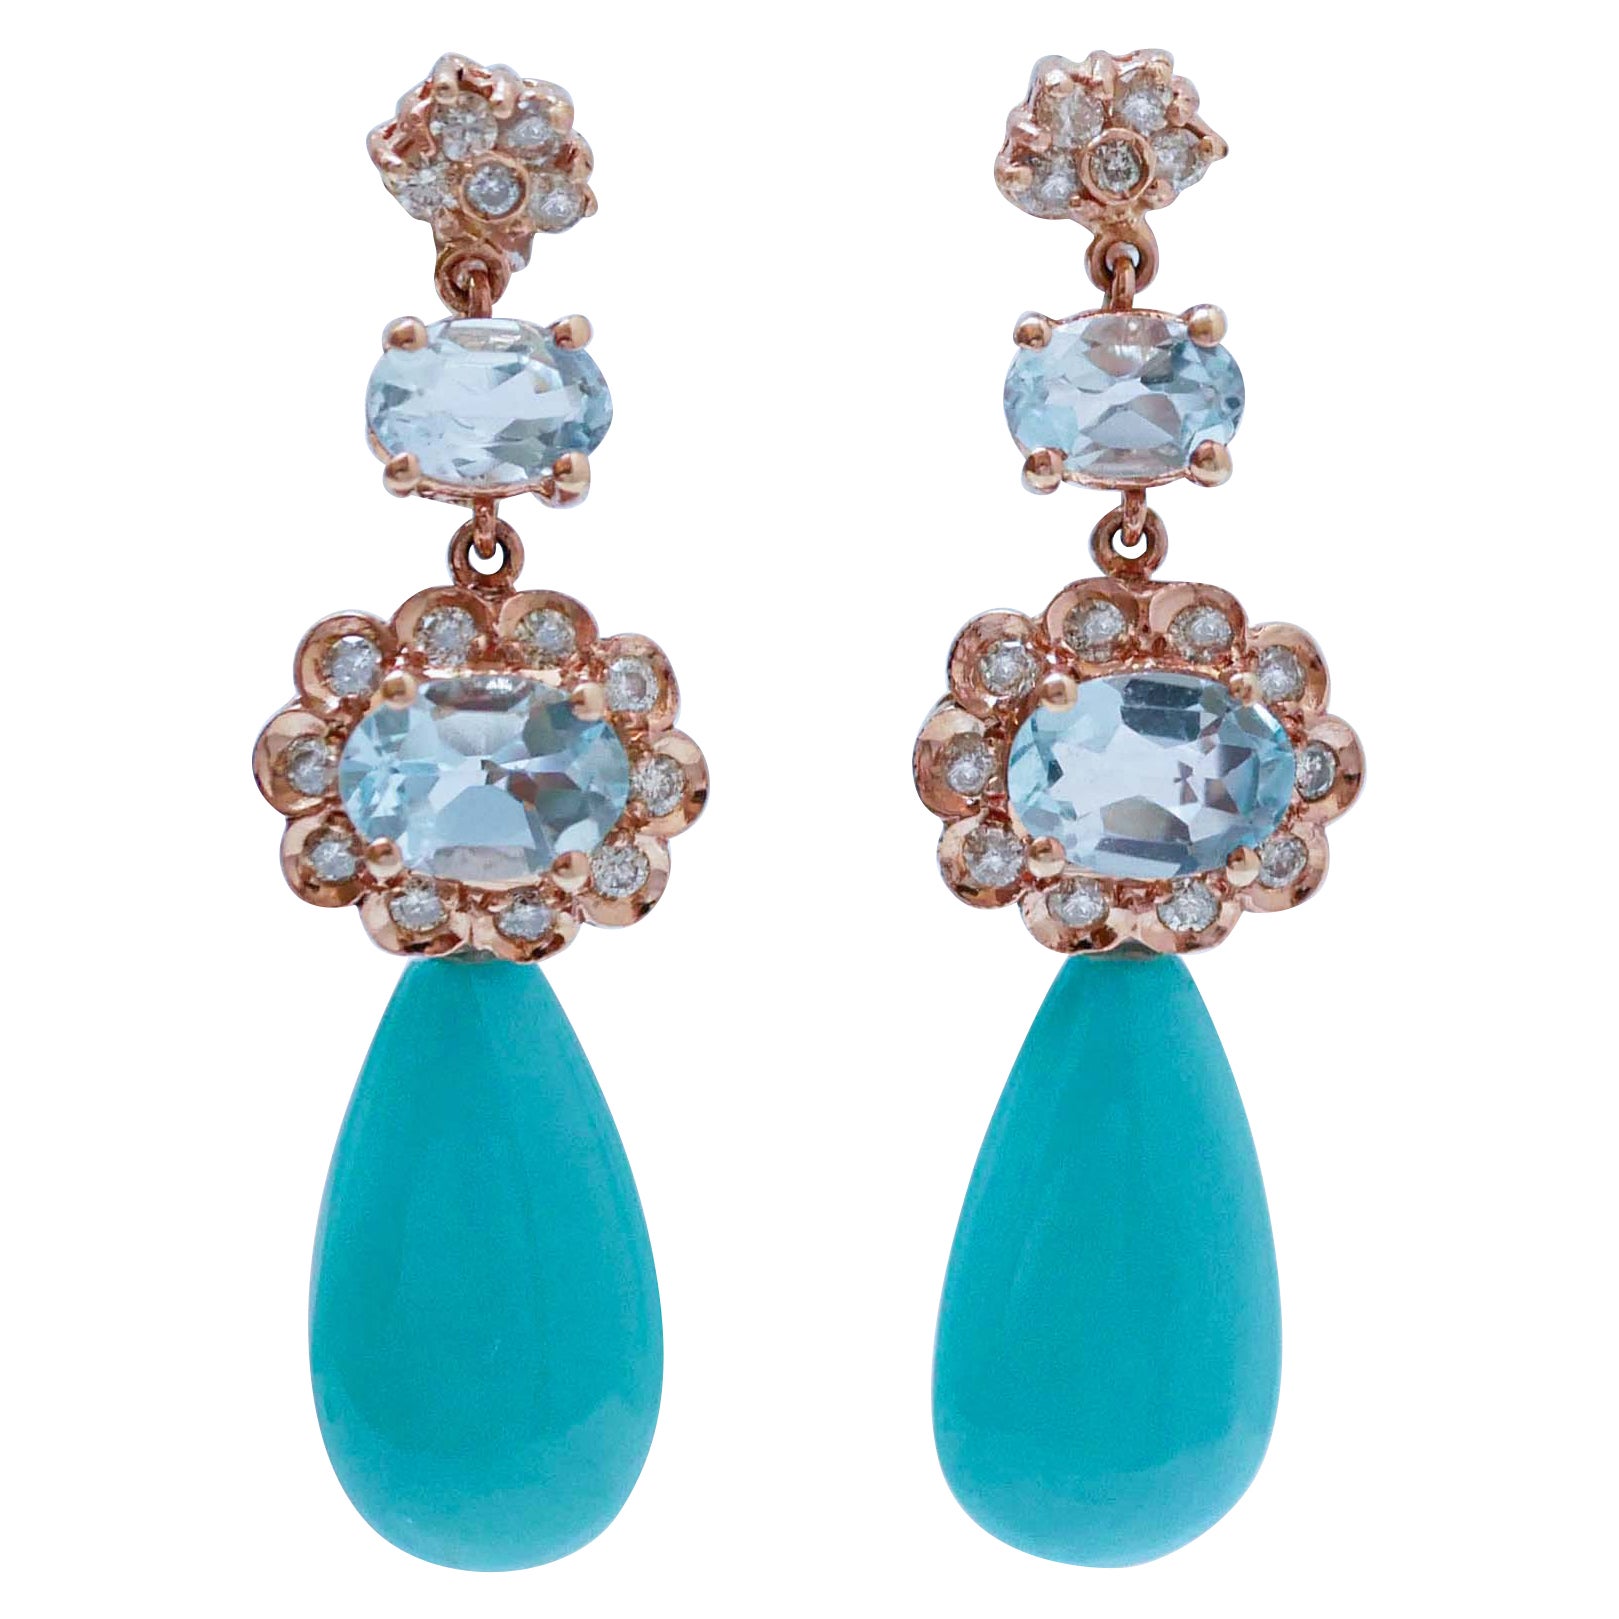 Turquoise, Aquamarina Colour Topazs, Diamonds, 14 Kt Rose Gold Earrings.